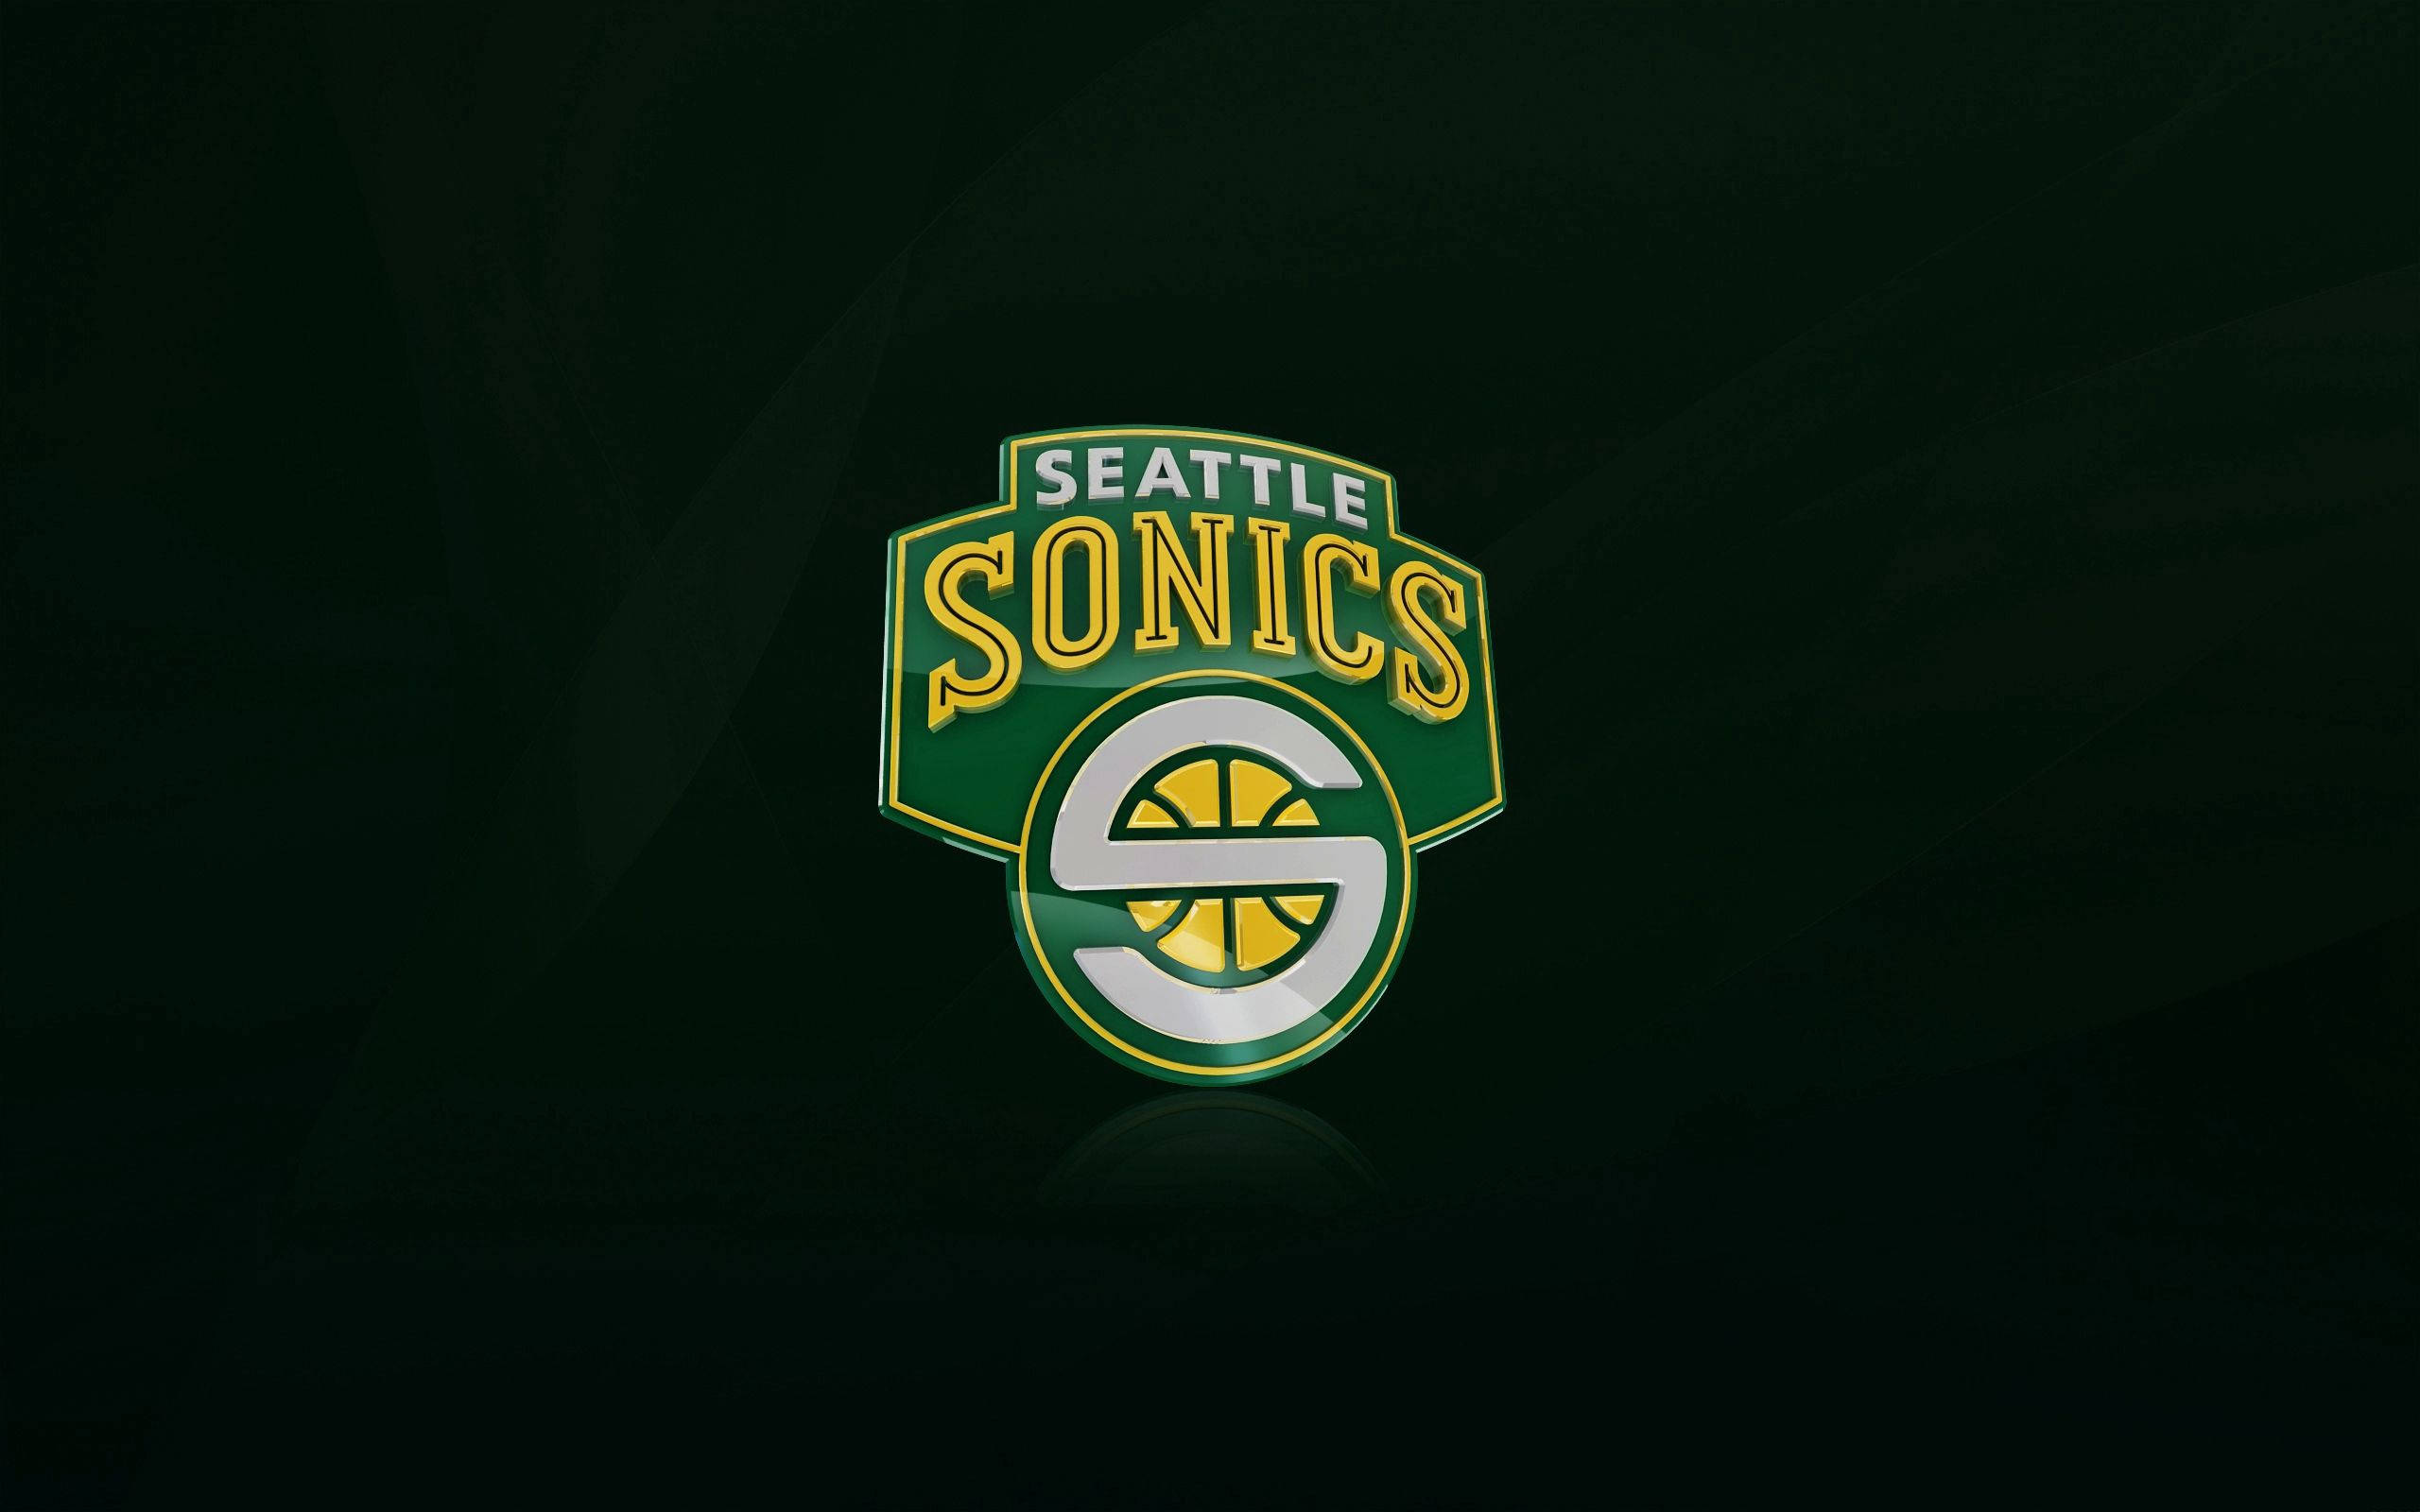 Downloaden Cooles Nba-logo Von Seattle Sonics Wallpaper | Wallpapers.com